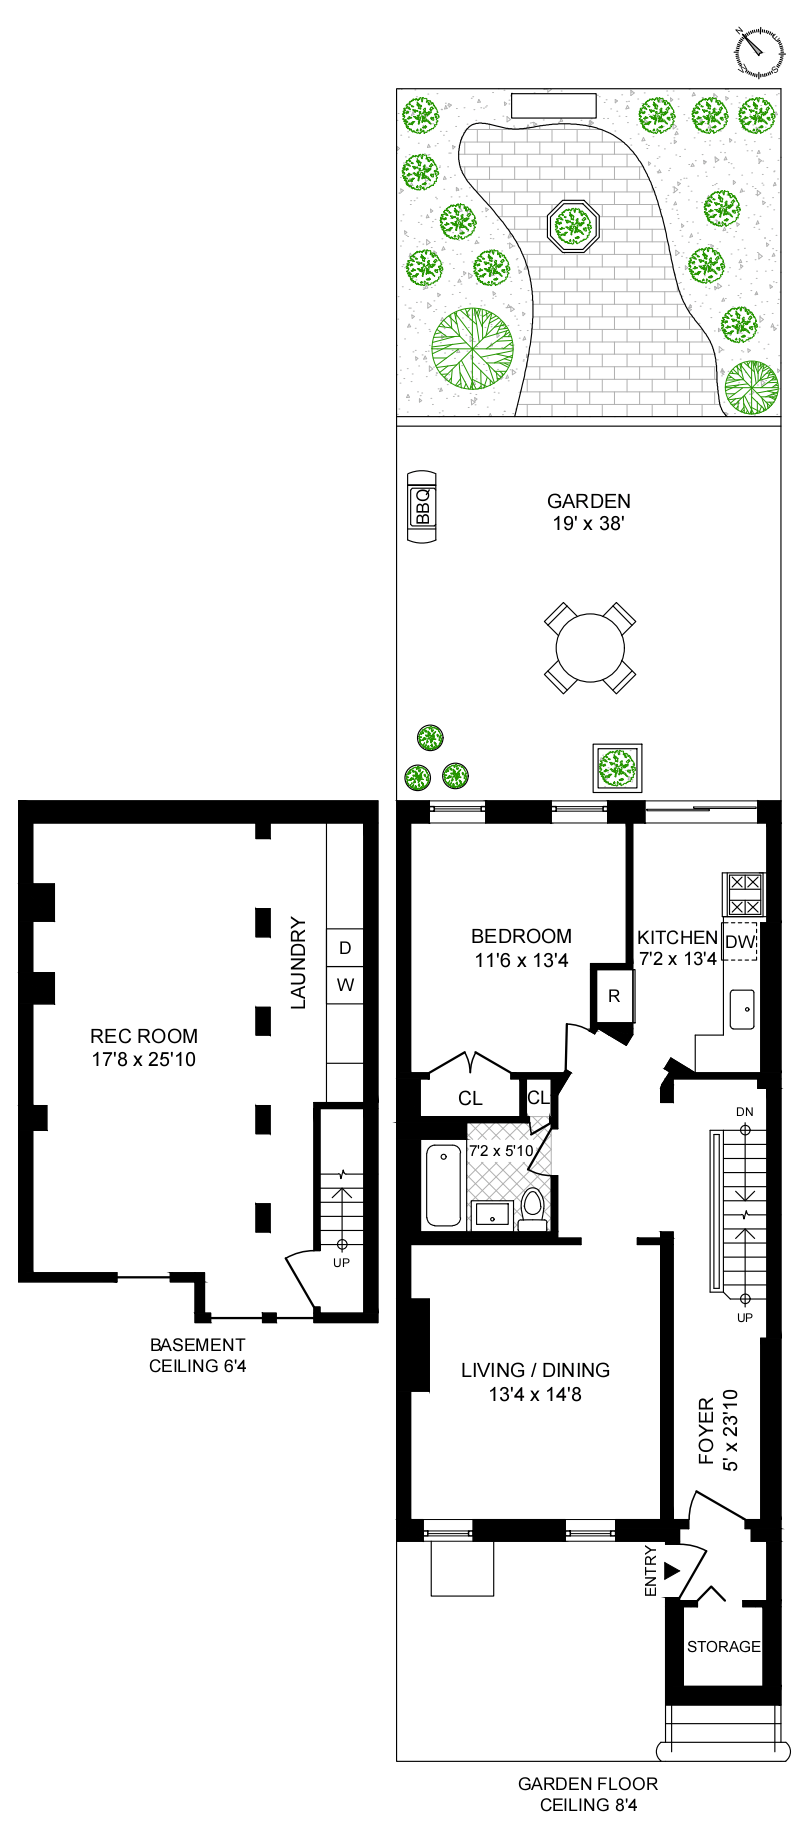 Floorplan for 459 9th Street, GRDN